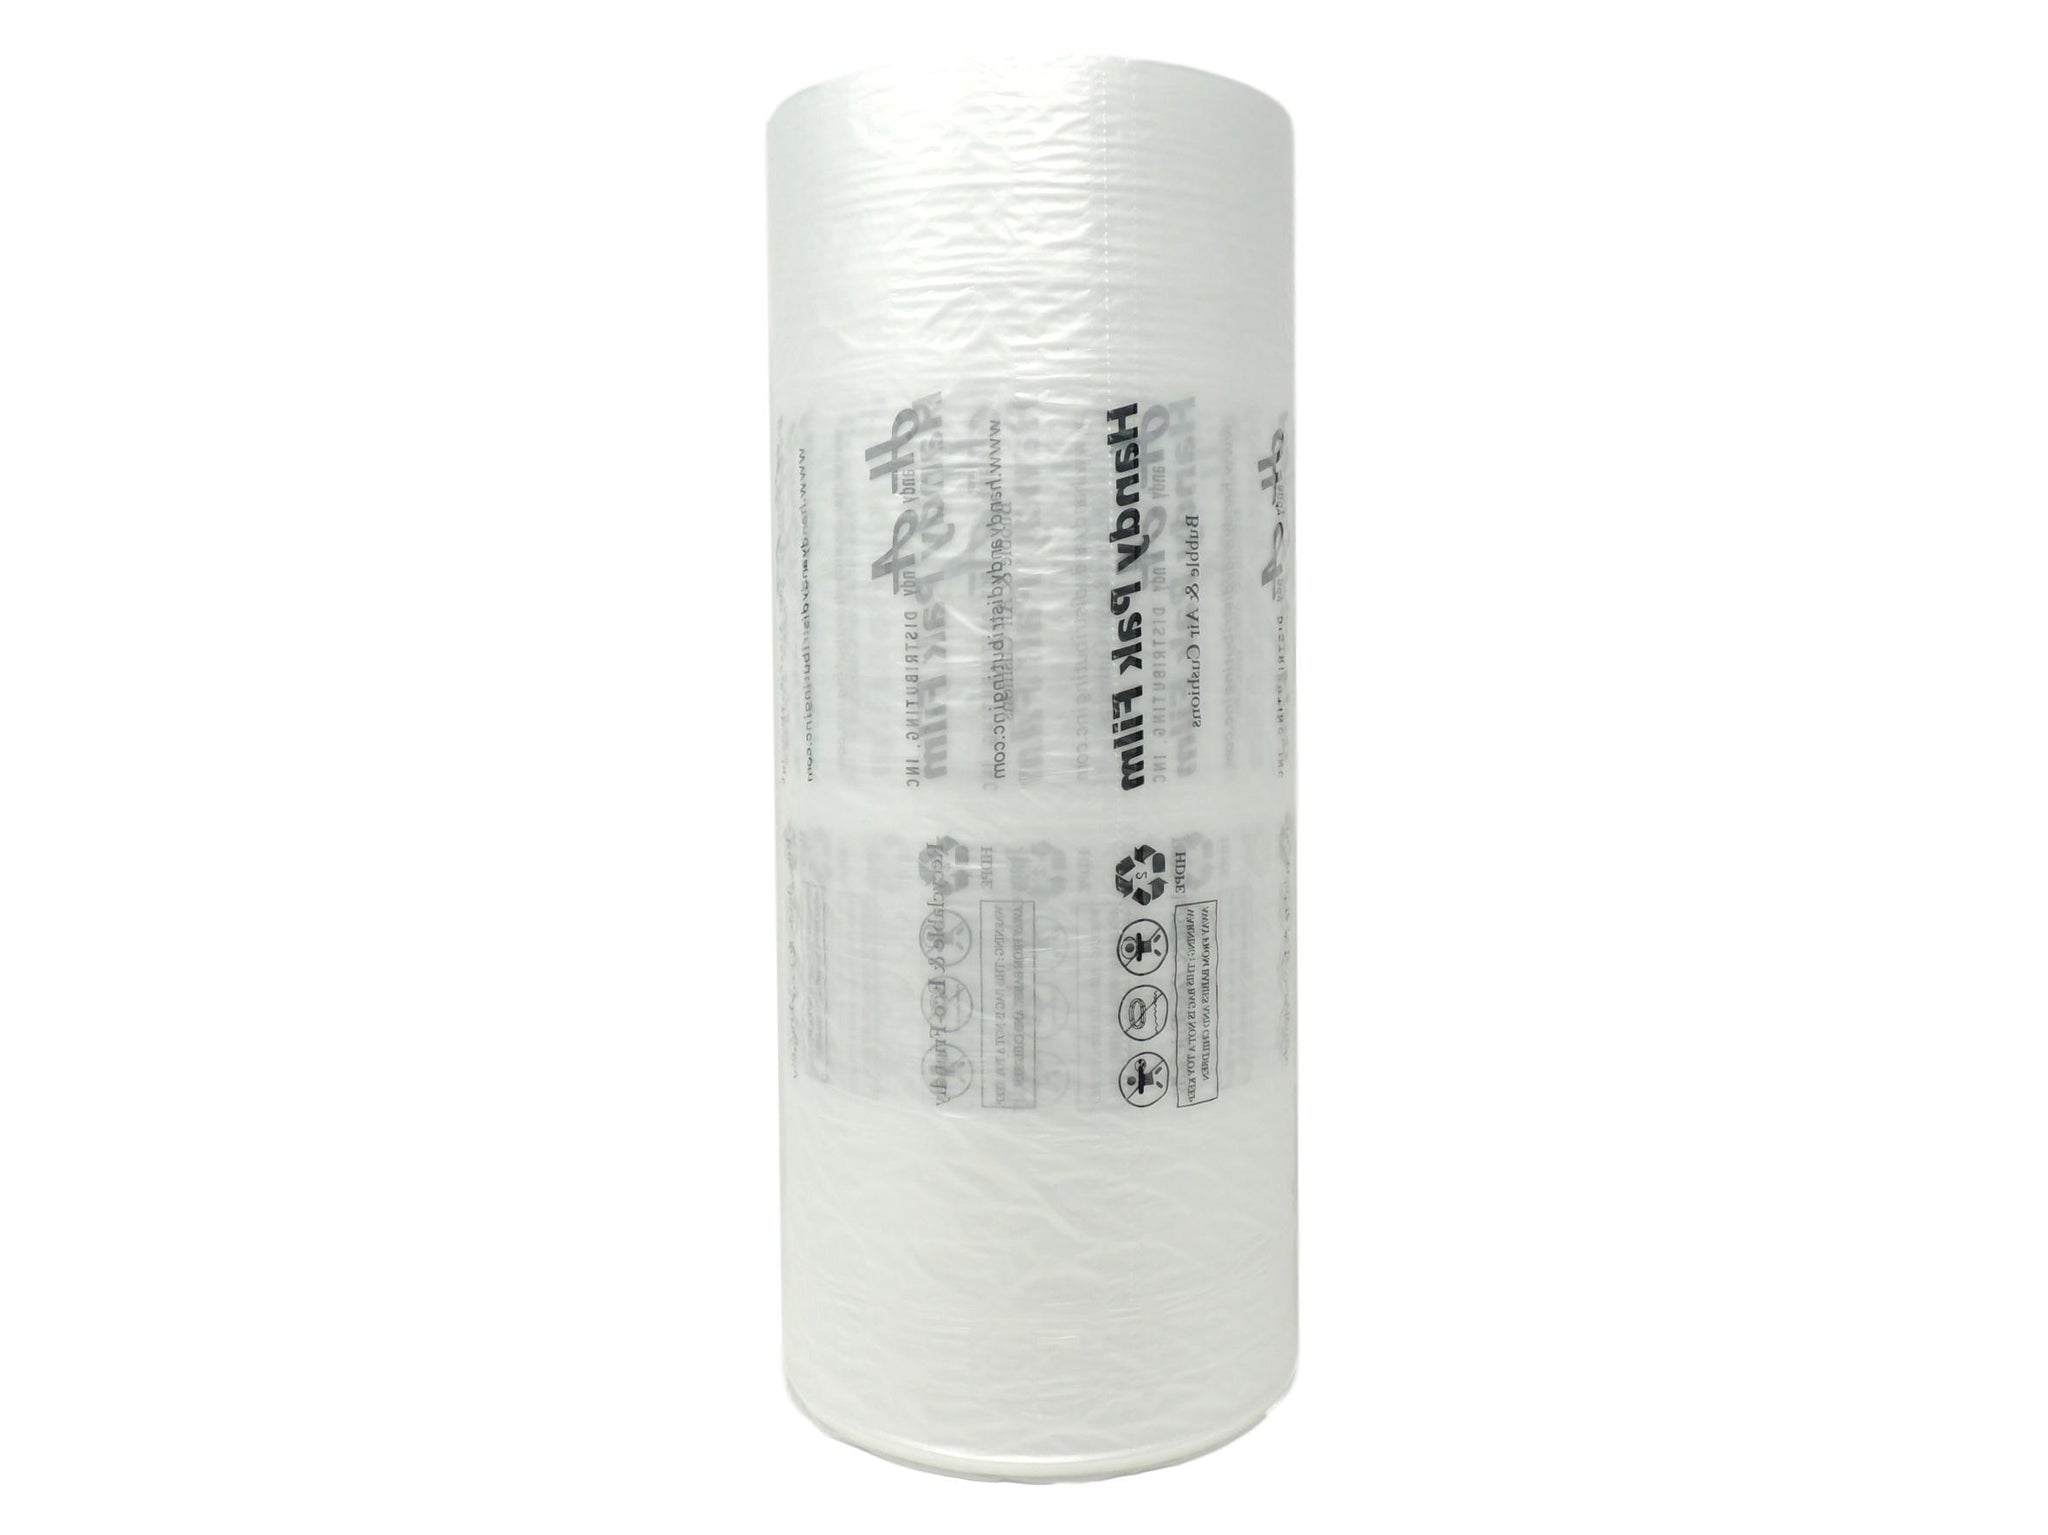 Colchón Niron Pocket RollPack 200x200 Double Size blanco 200x200x24 -  8683742125495